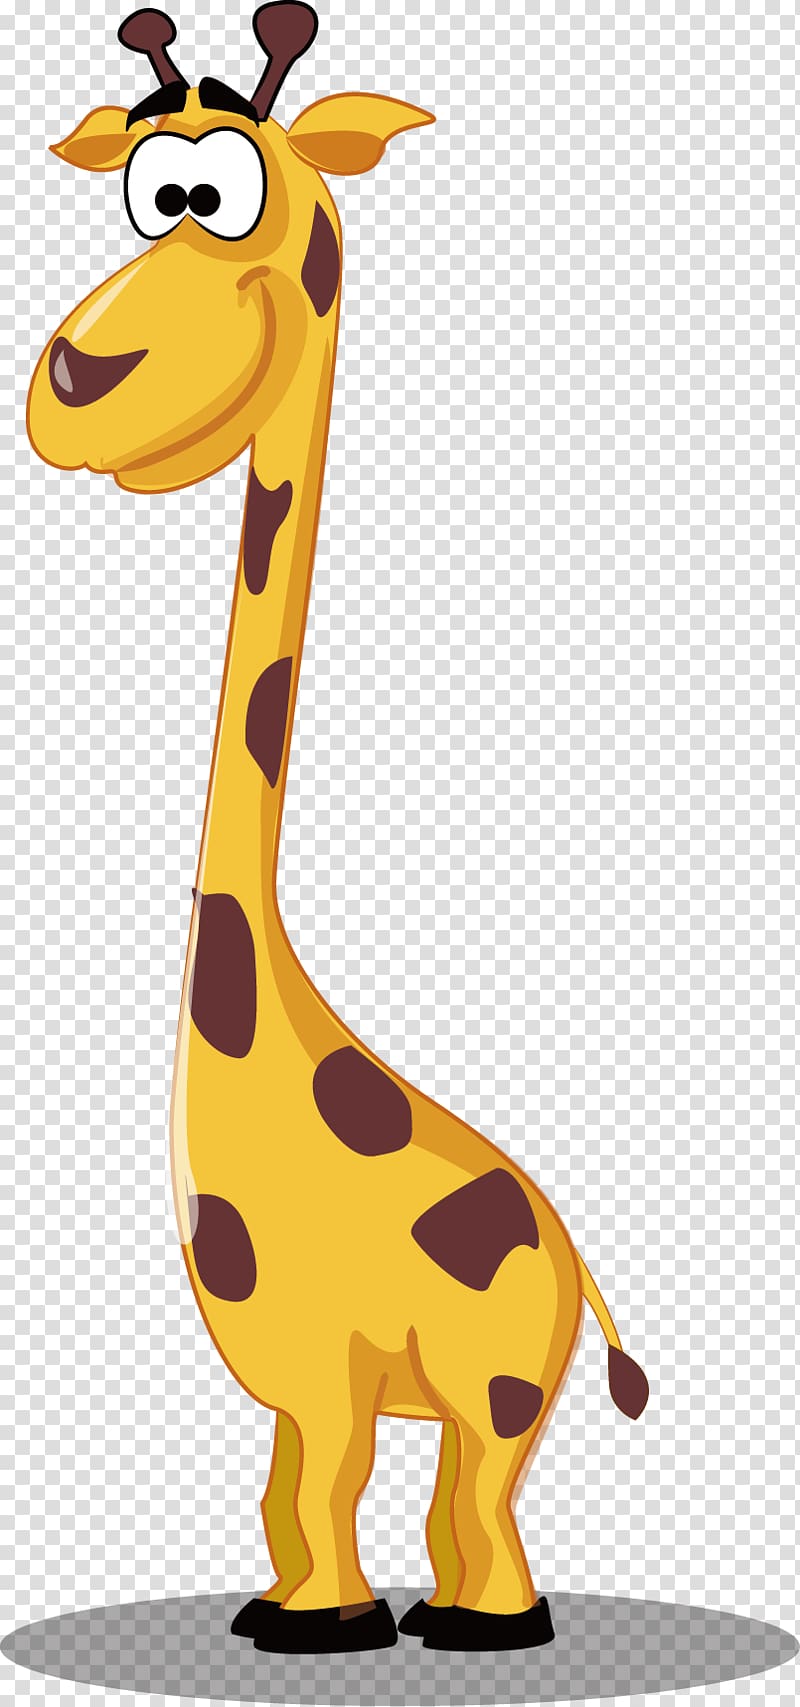 Giraffe Animal Cartoon Illustration, Giraffe decoration transparent background PNG clipart